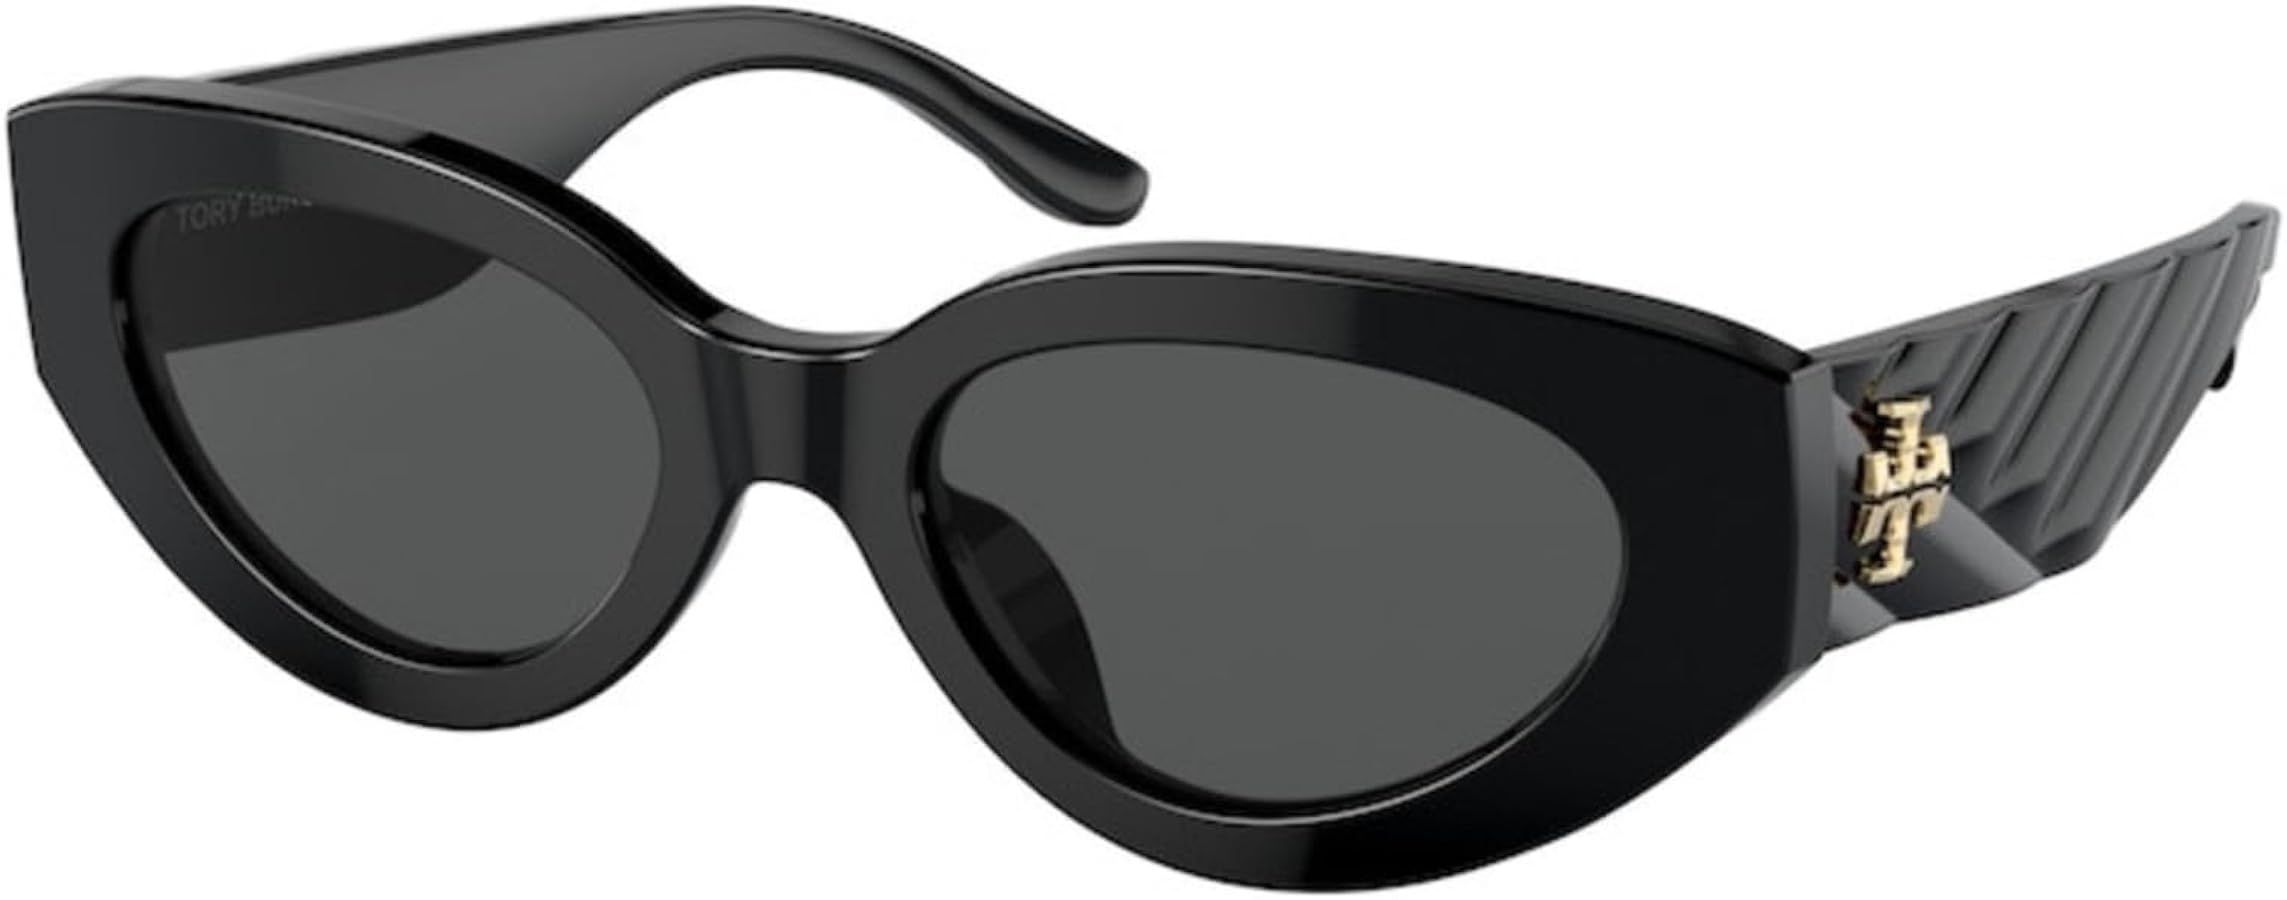 Tory Burch Sunglasses TY 7178 U 170987 Black | Amazon (US)